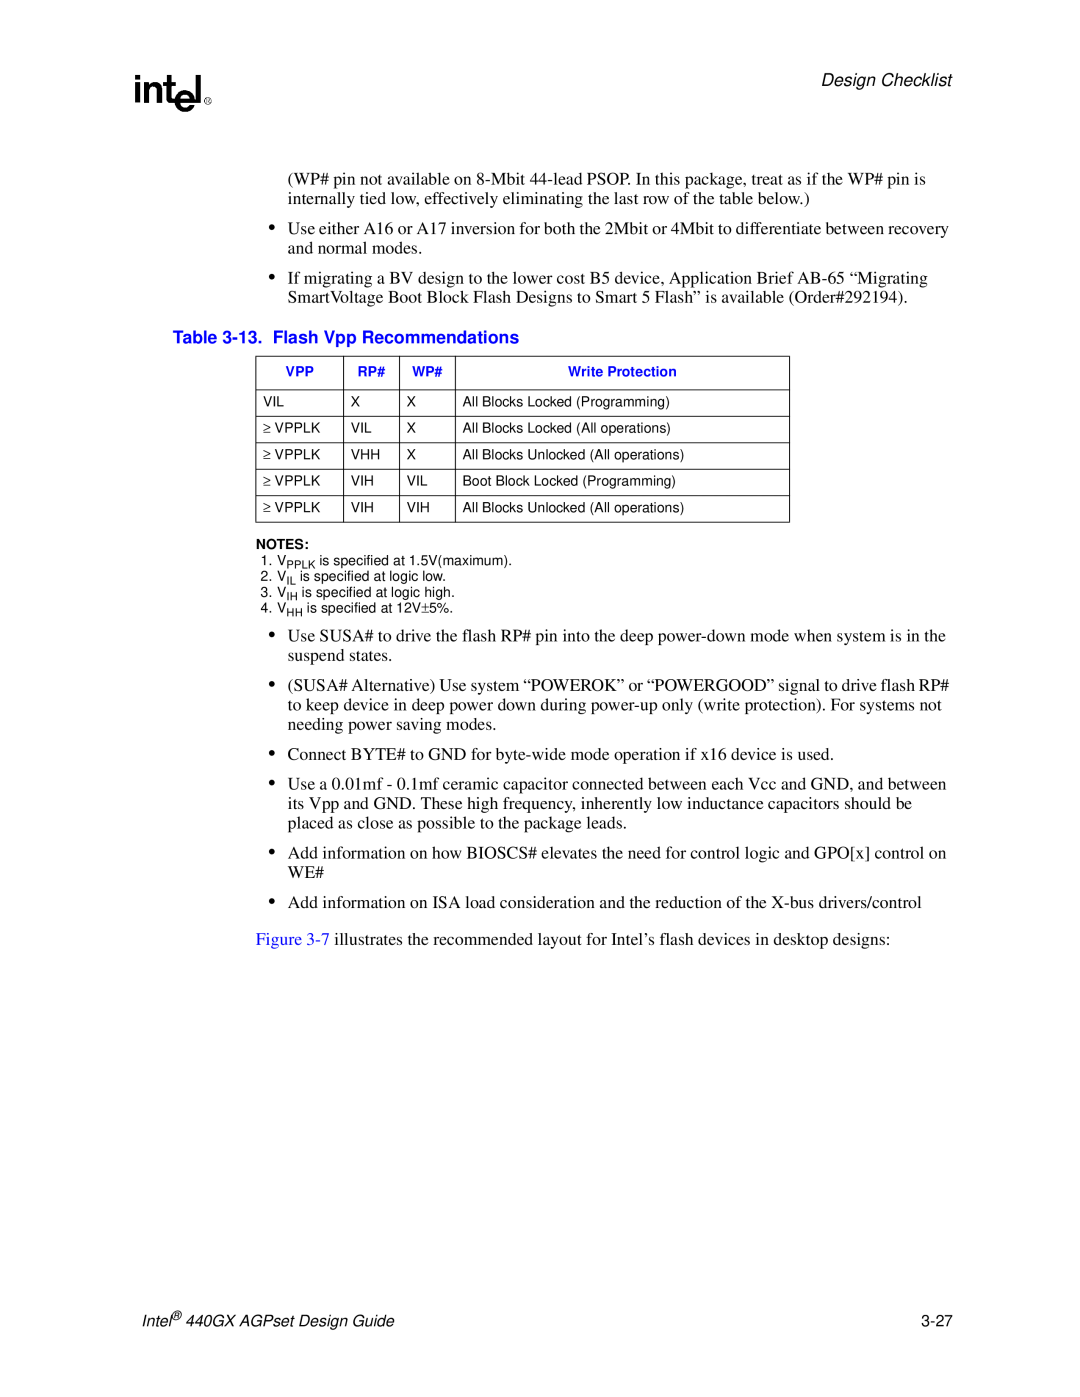 Intel 440GX manual 13. Flash Vpp Recommendations, Design Checklist, Write Protection 